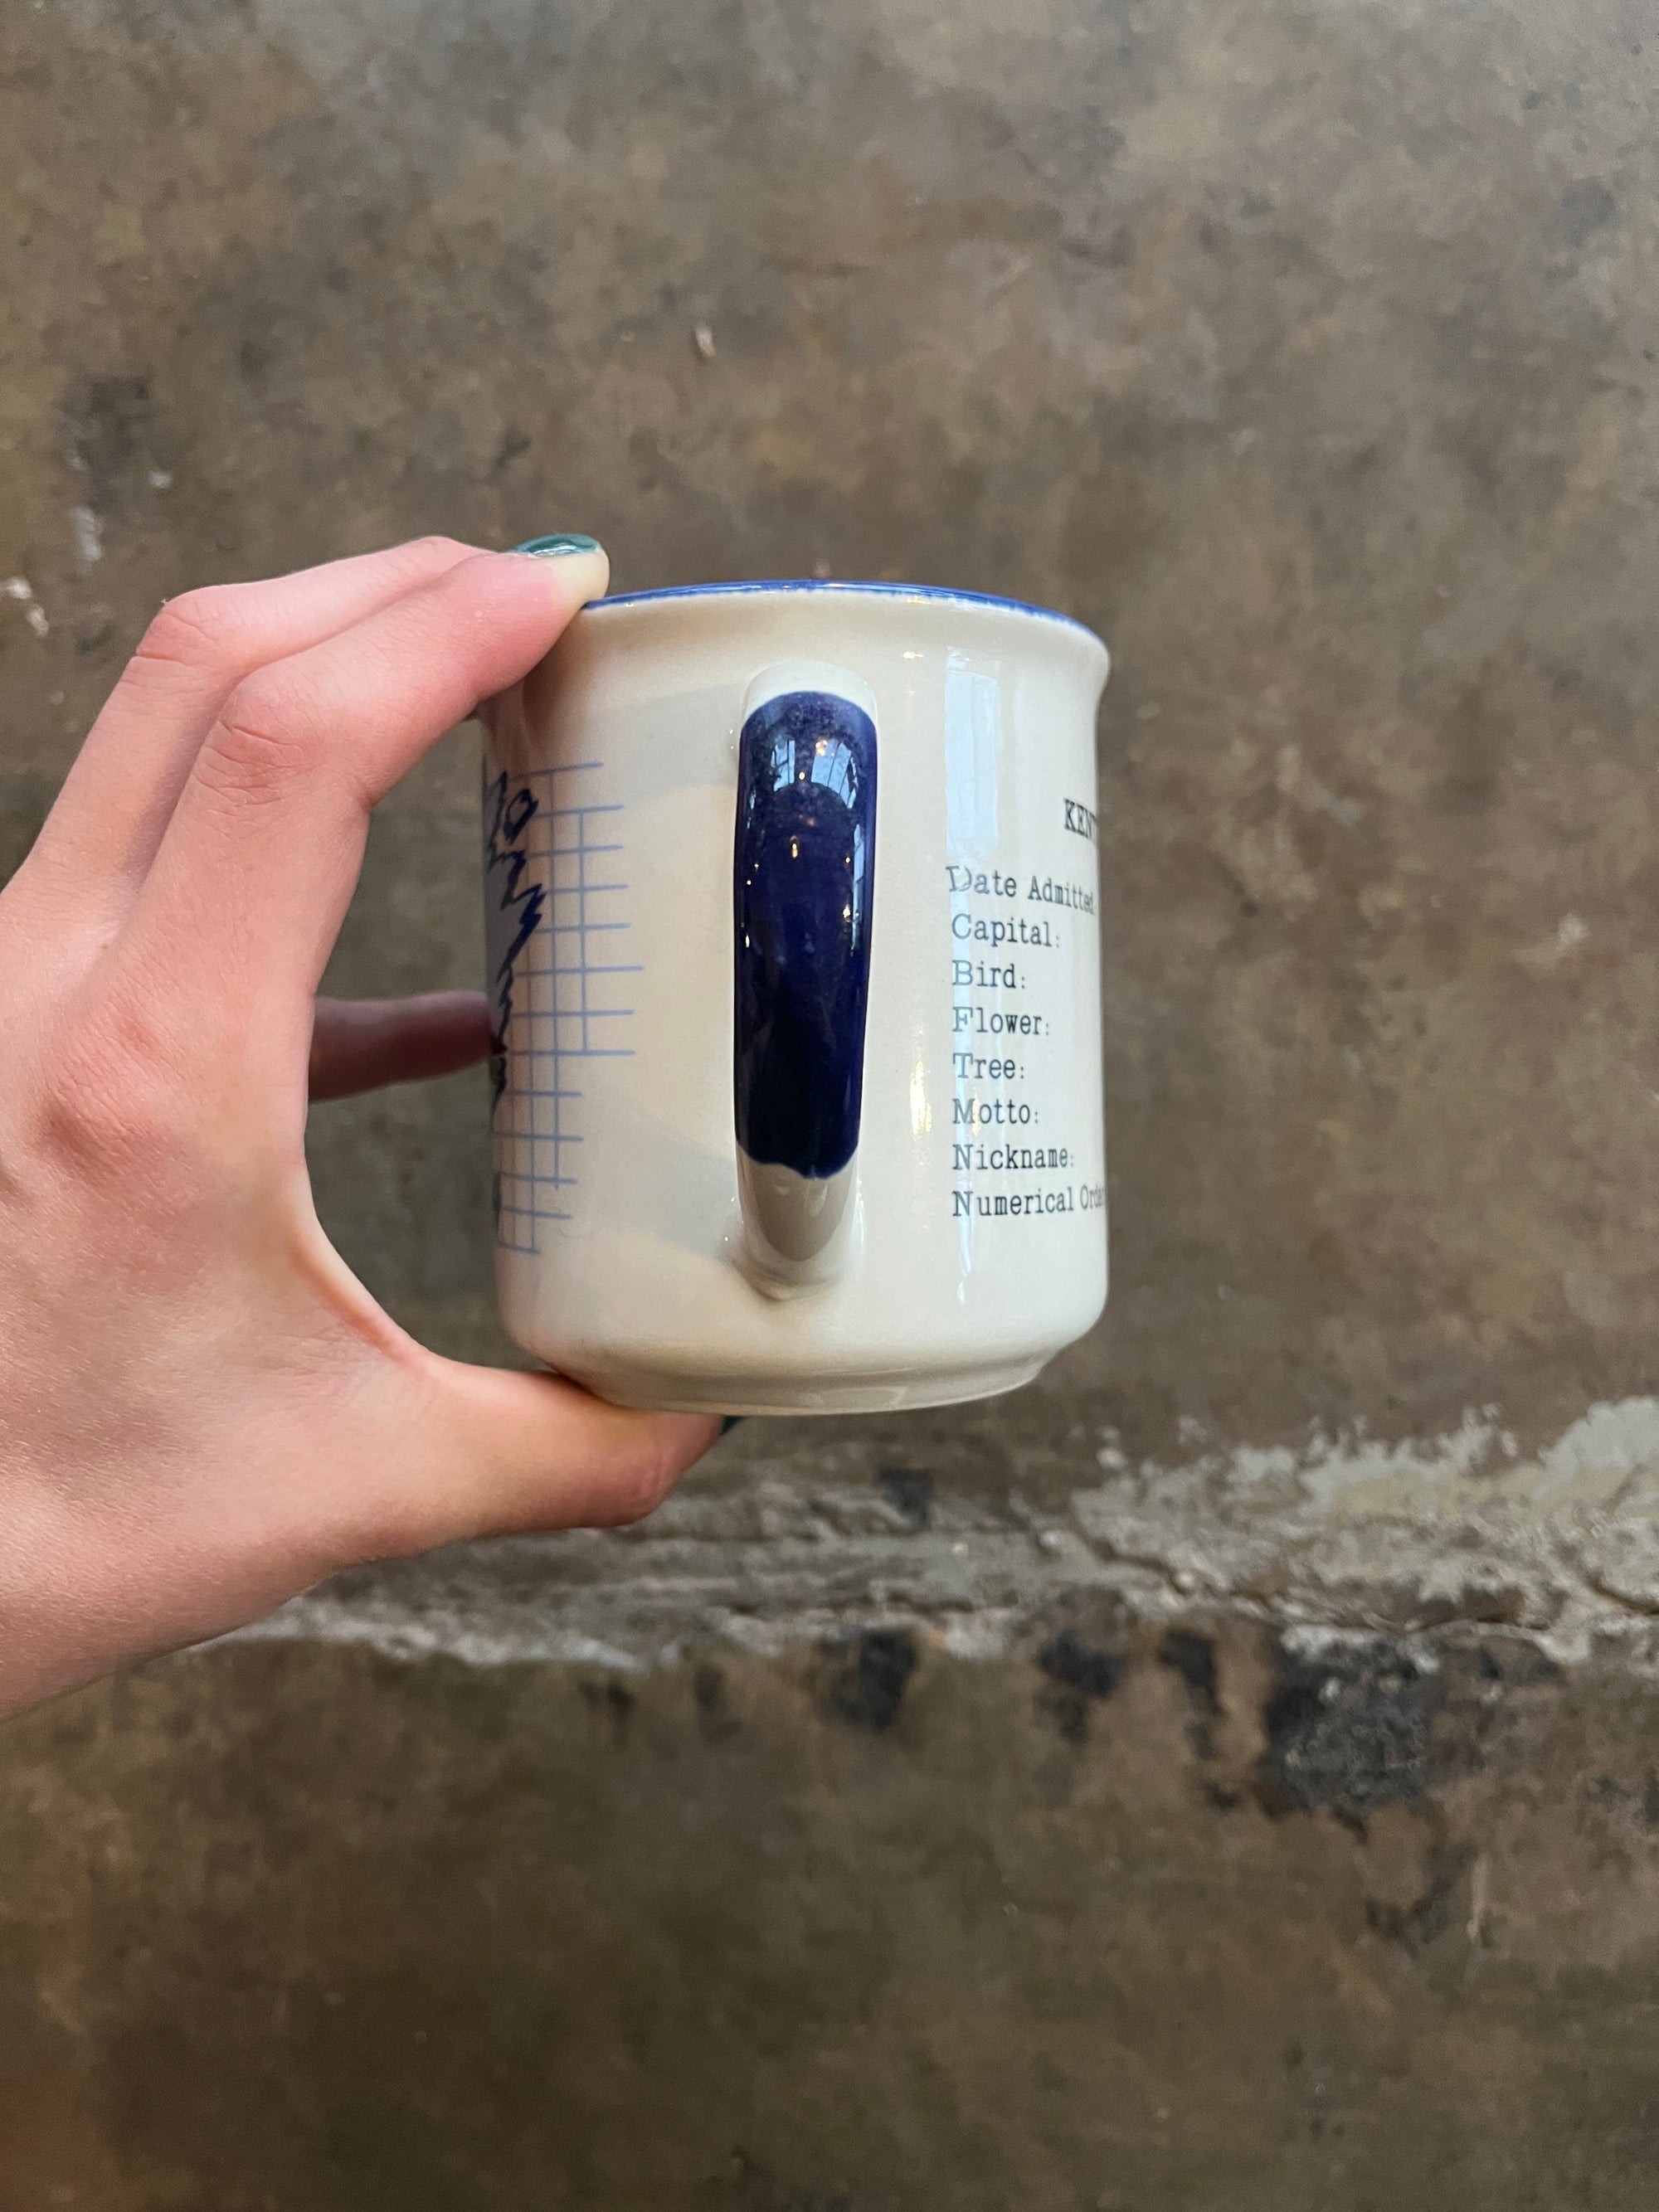 Kentucky Ceramic Mug